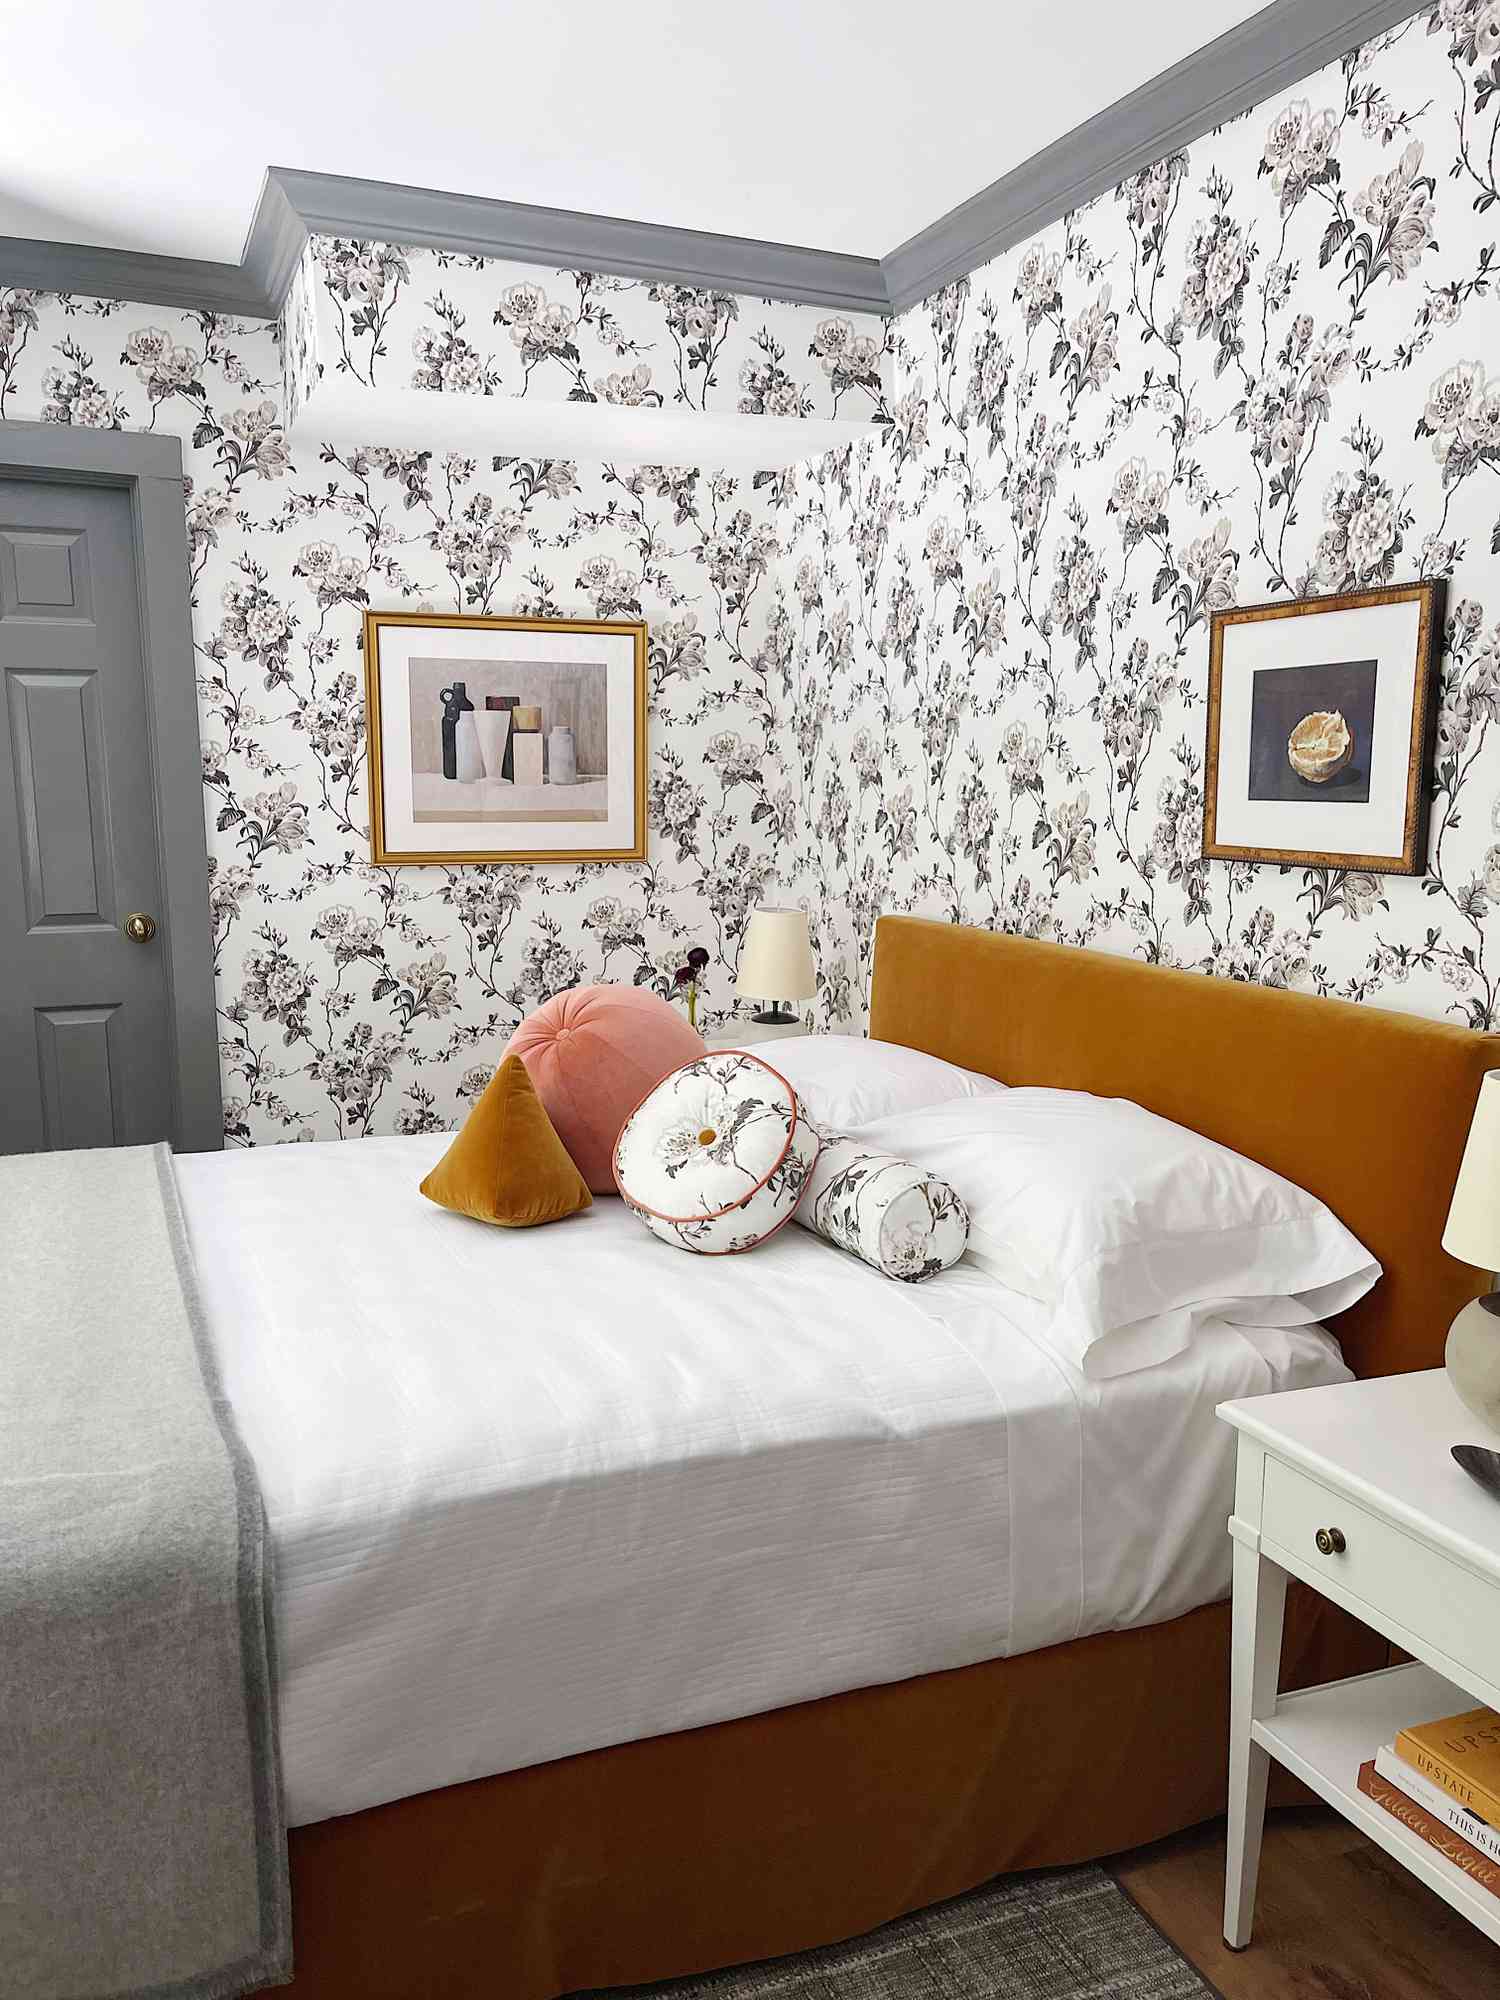 Getapertes Zimmer mit ockerfarbenem Bettgestell